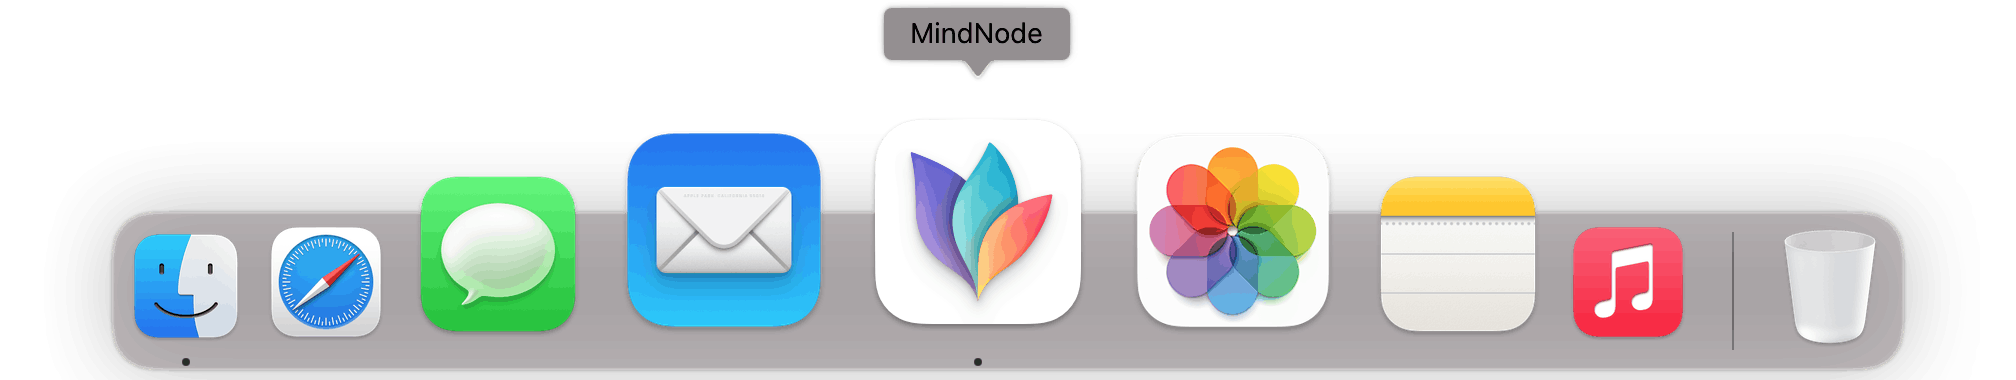 MindNode's new App Icon